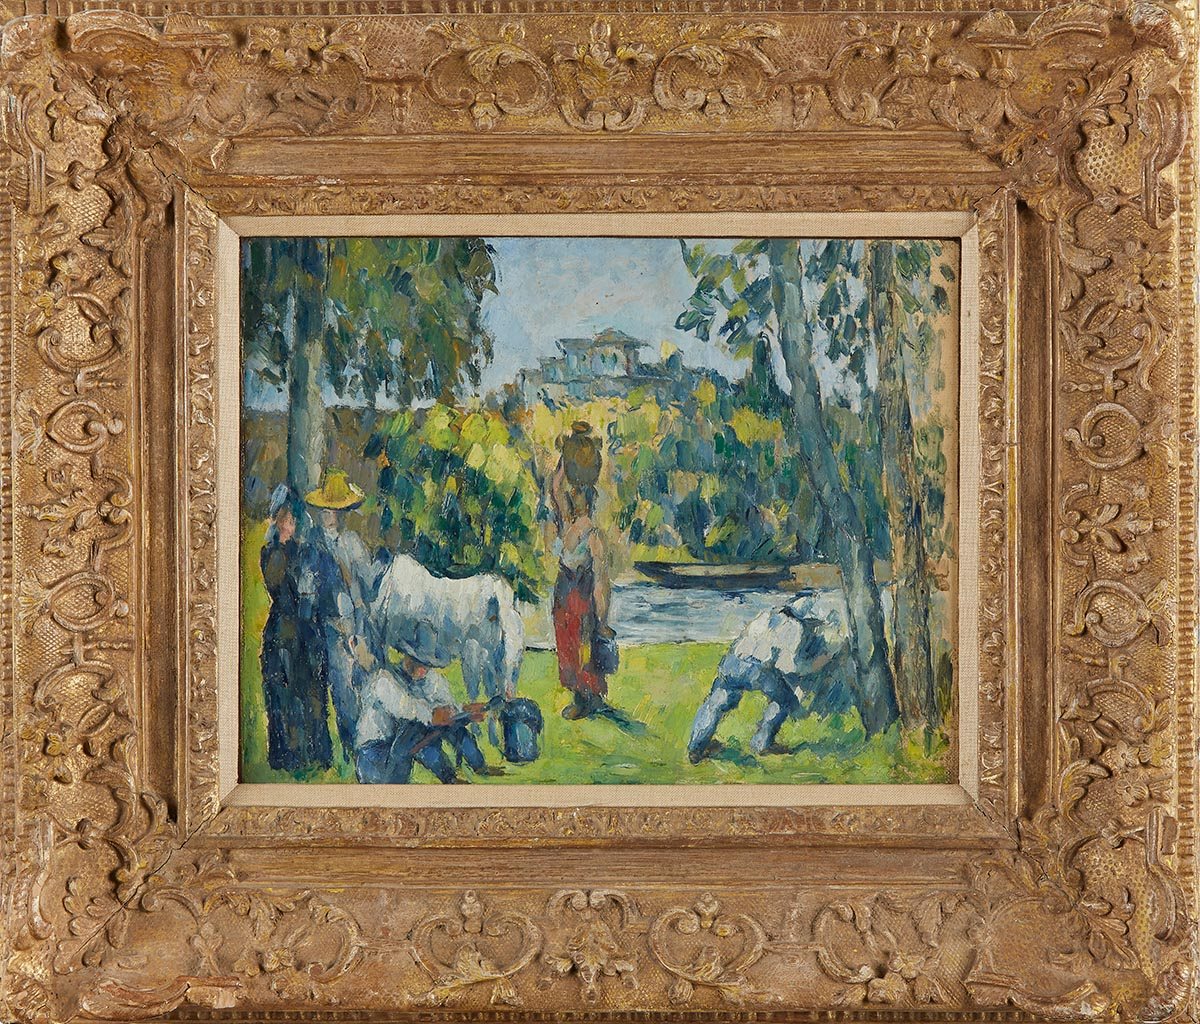 Paul Cézanne (French 1839-1906), La Vie des Champs, Oil on canvas, Sold at Freeman's for $1,450,000